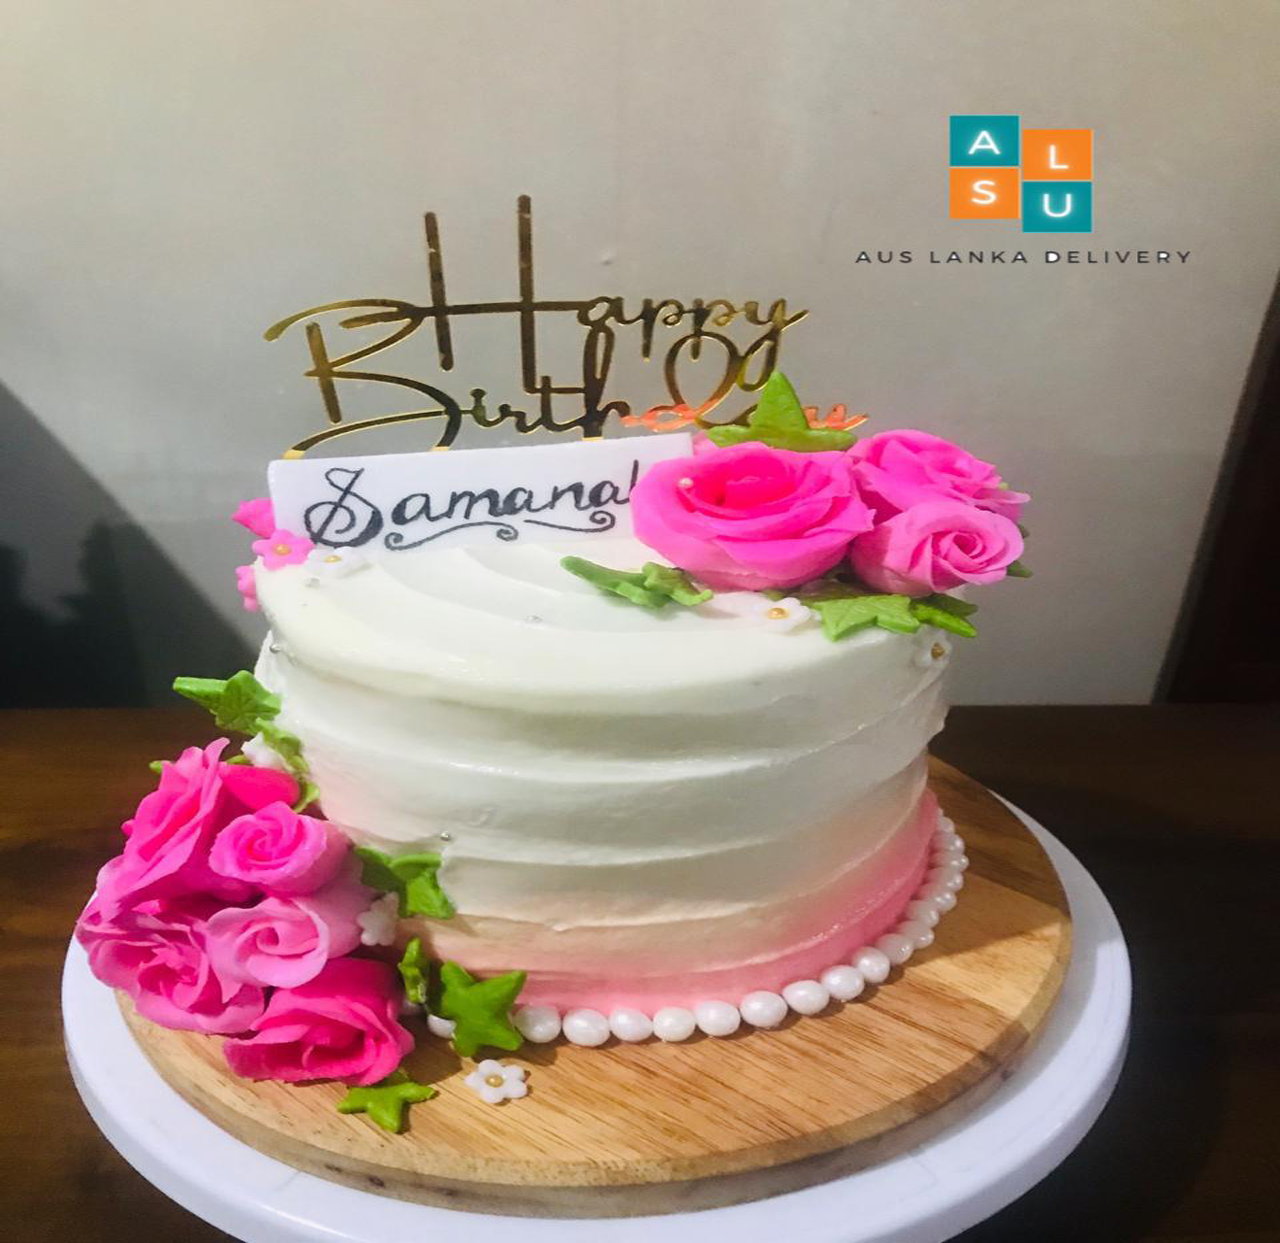 Flower Vanila Cake – Aus Lanka Delivery